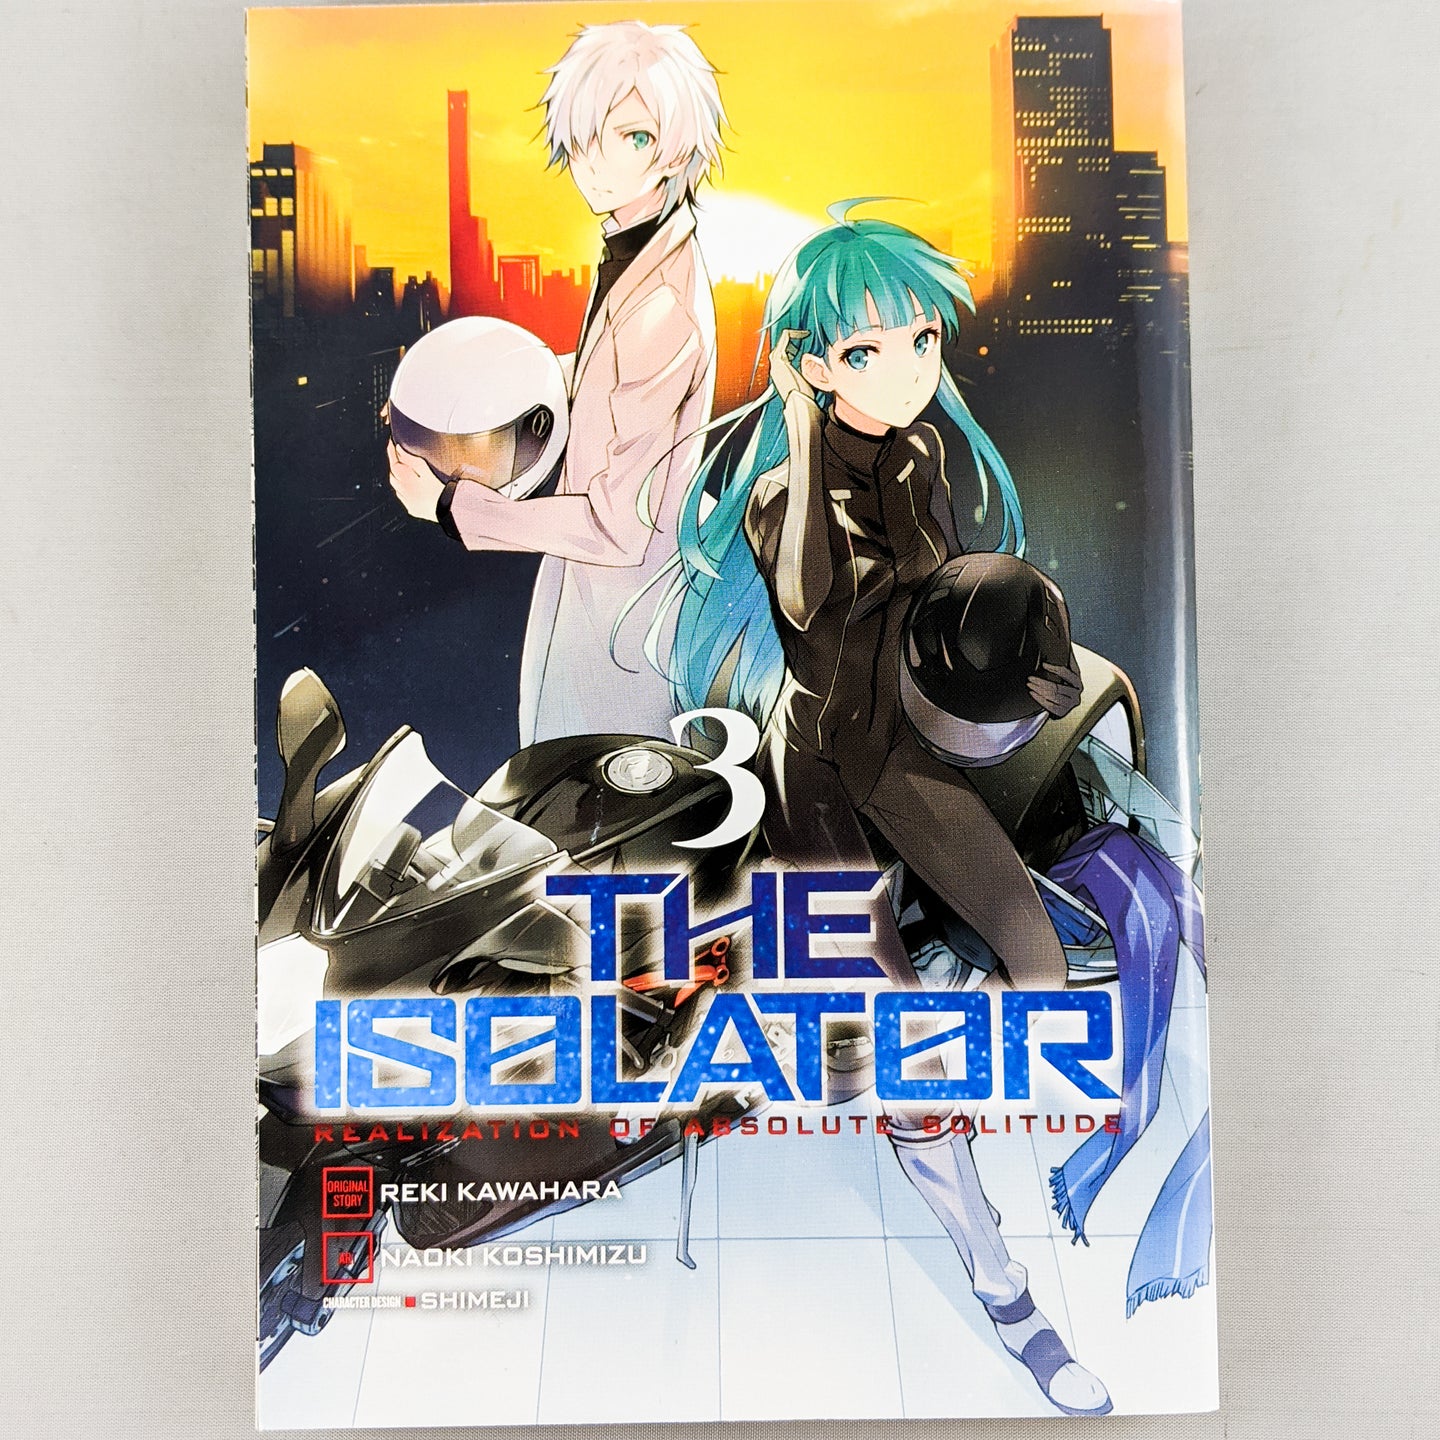 Isolator: Realization of Absolute Solitude Manga Volume 3